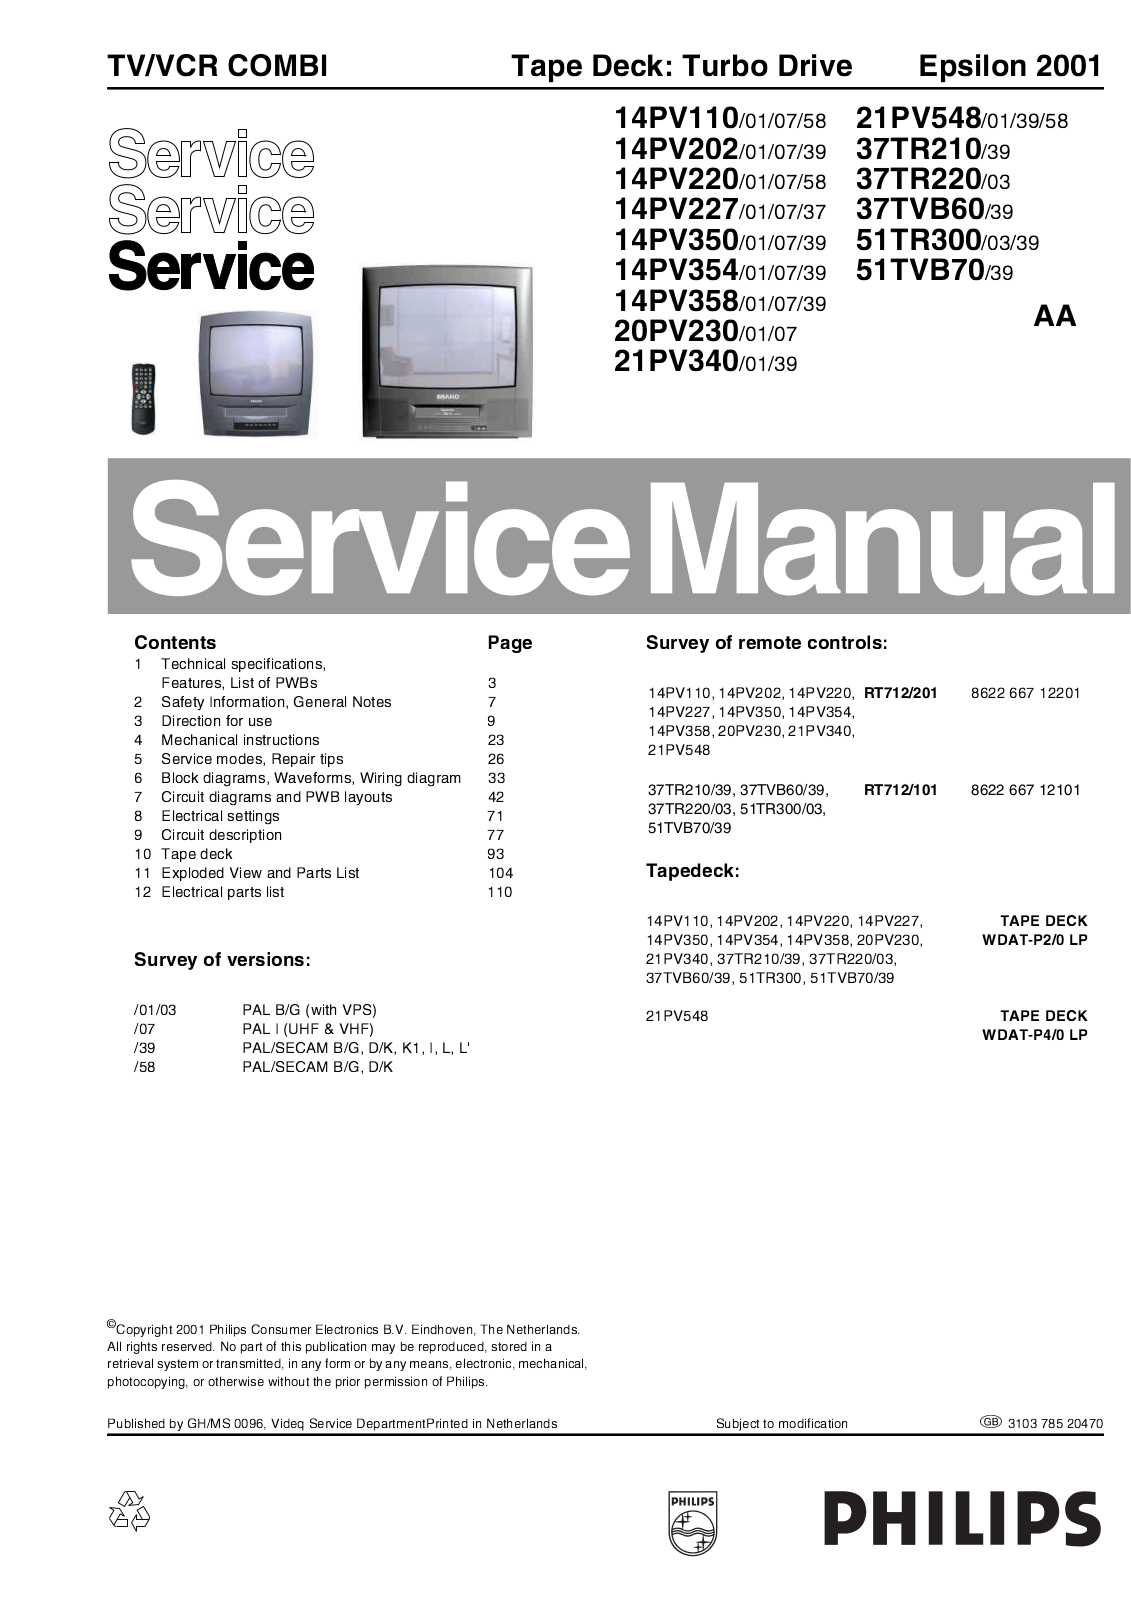 philips 14PV110, 14PV202, 14PV 220, 14PV 227, 14PV230 Service Manual